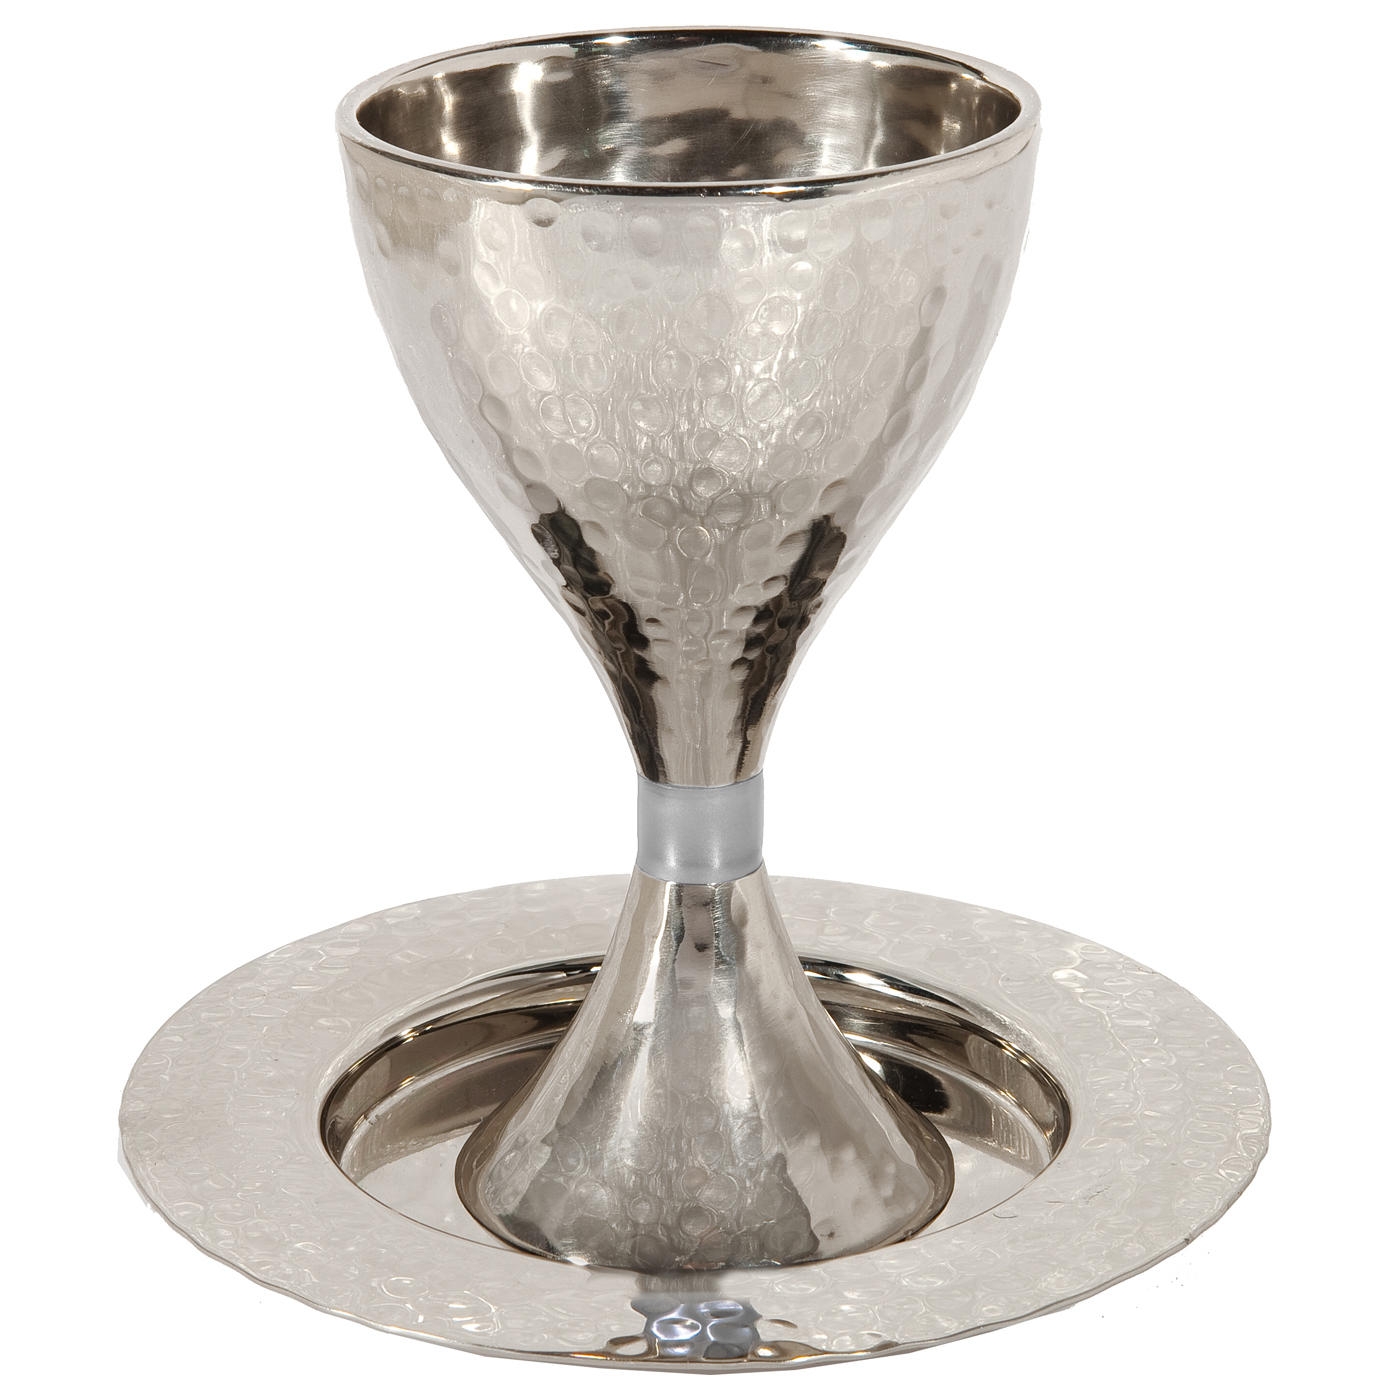 Yair Emanuel Textured Nickel Kiddush Cup and Saucer - 1